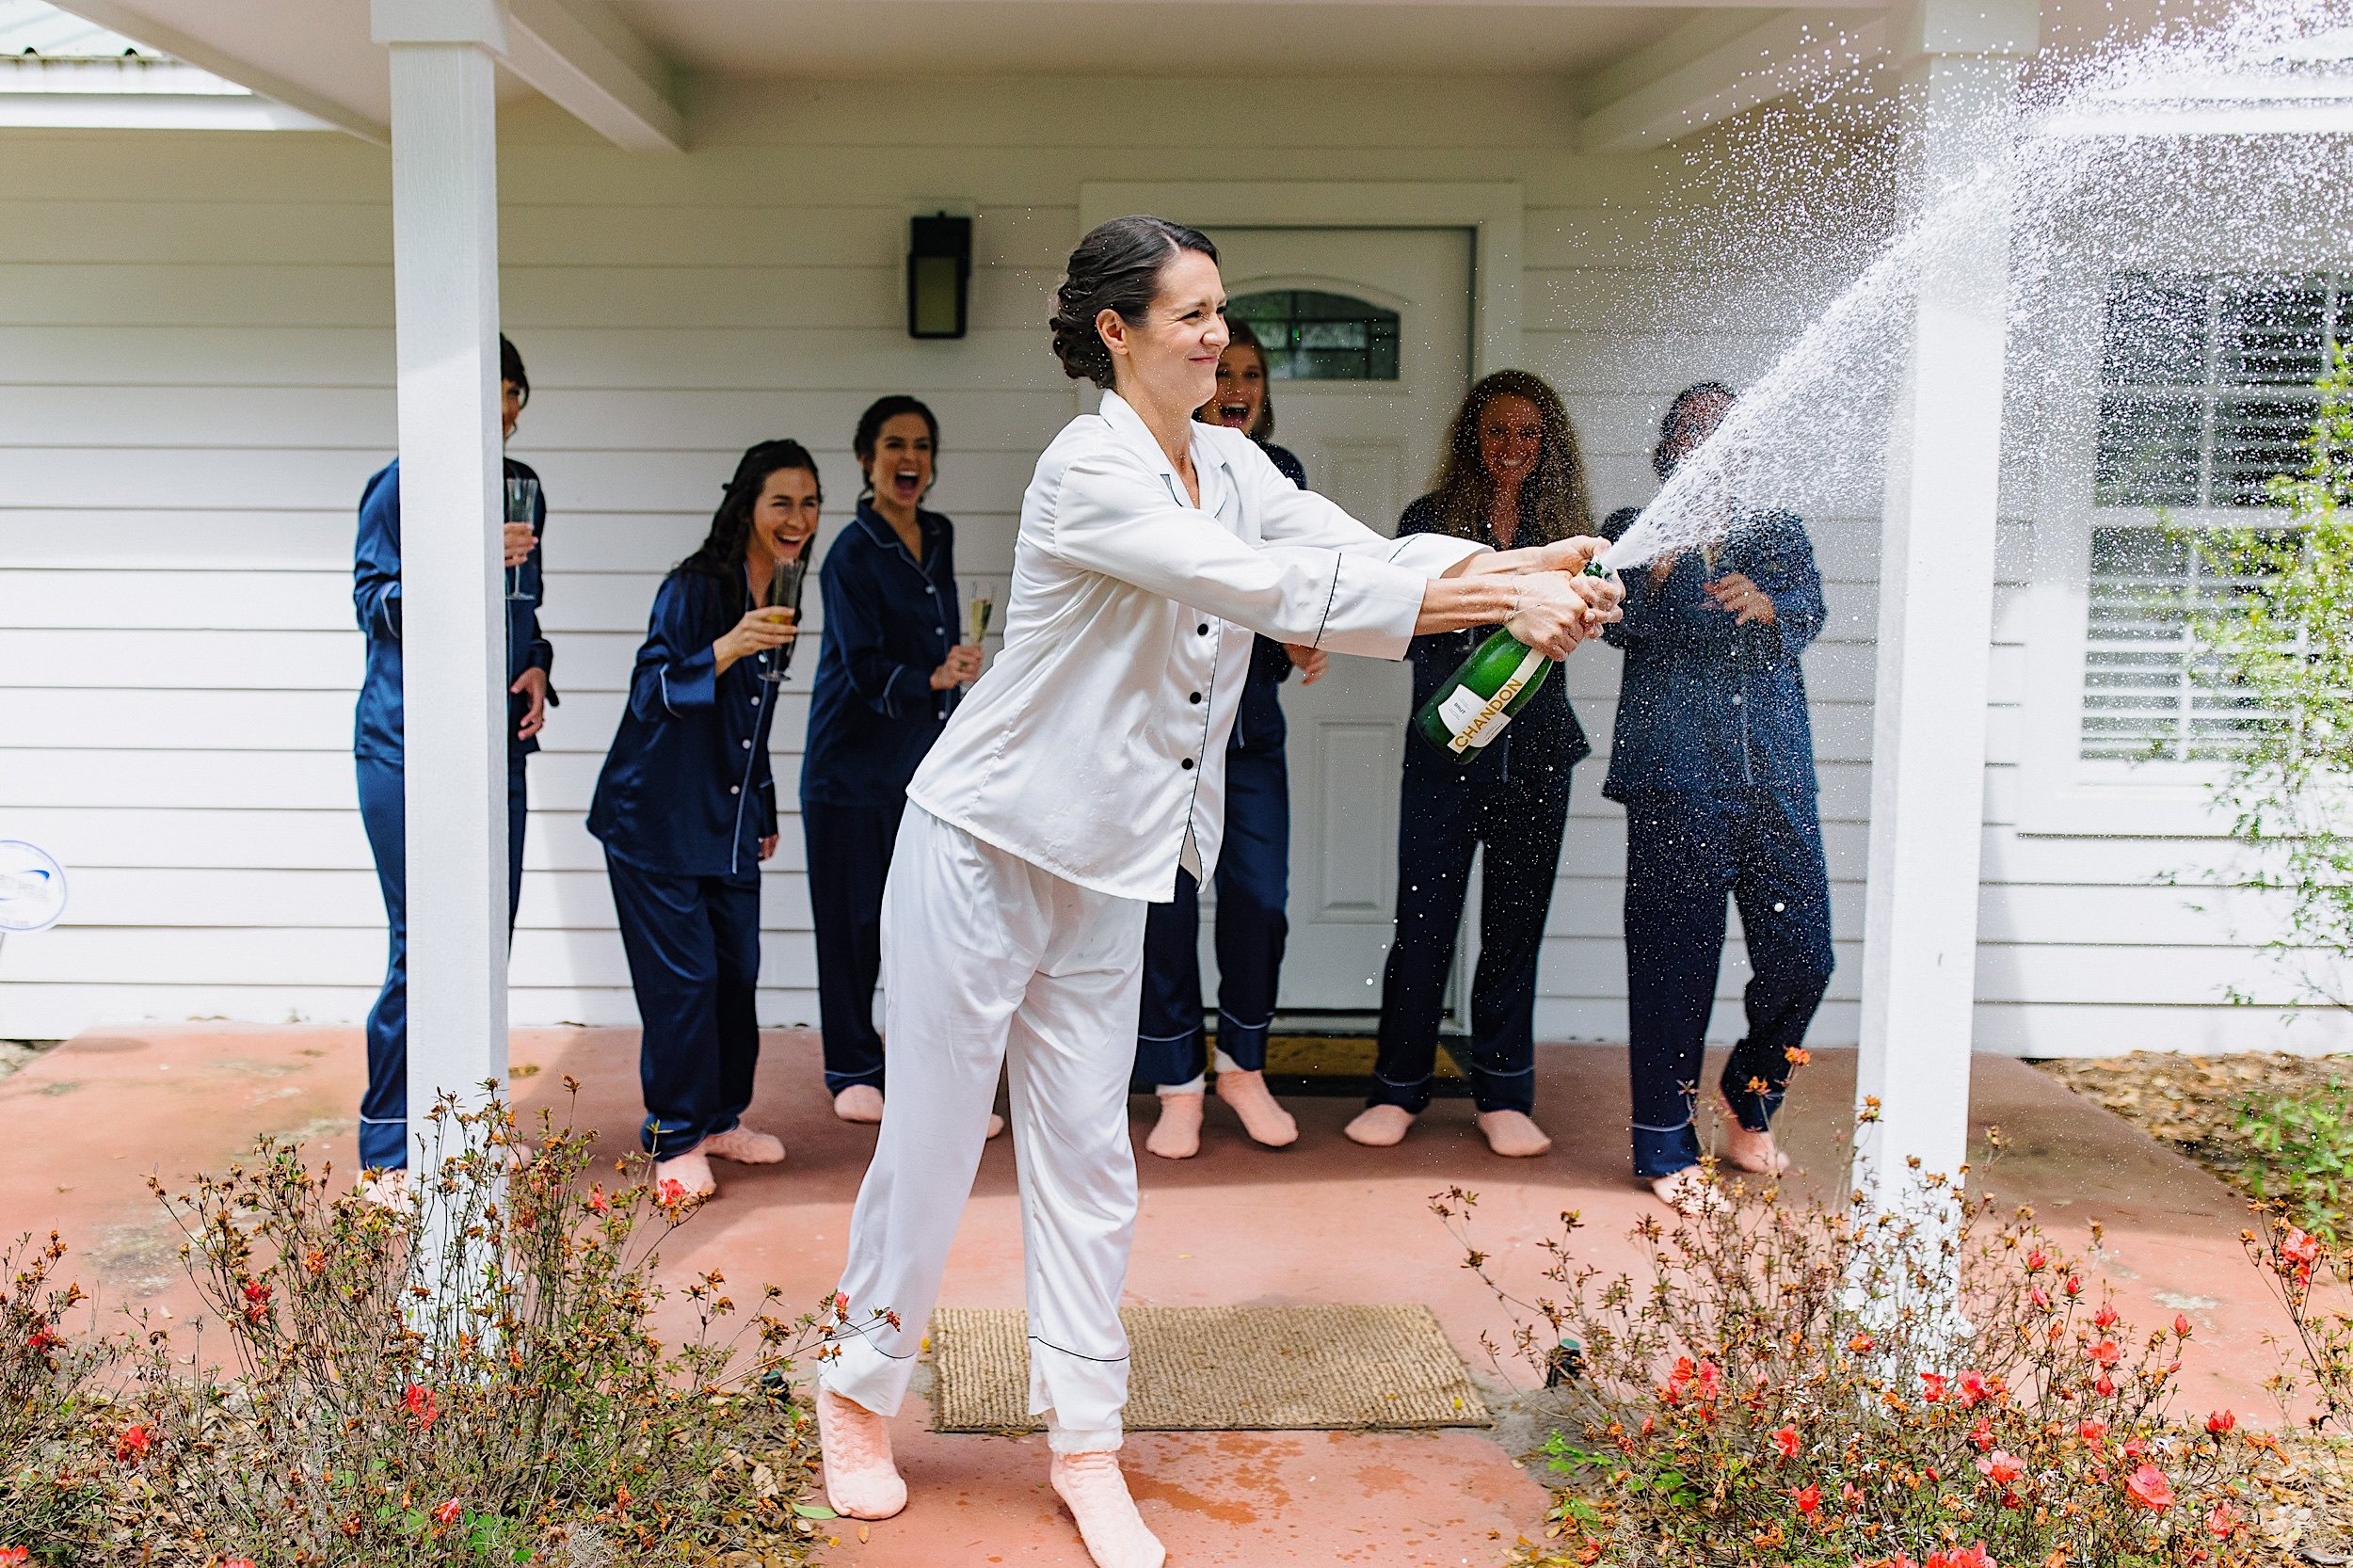 004-Bride-spraying-champagne-on-wedding-day.jpg